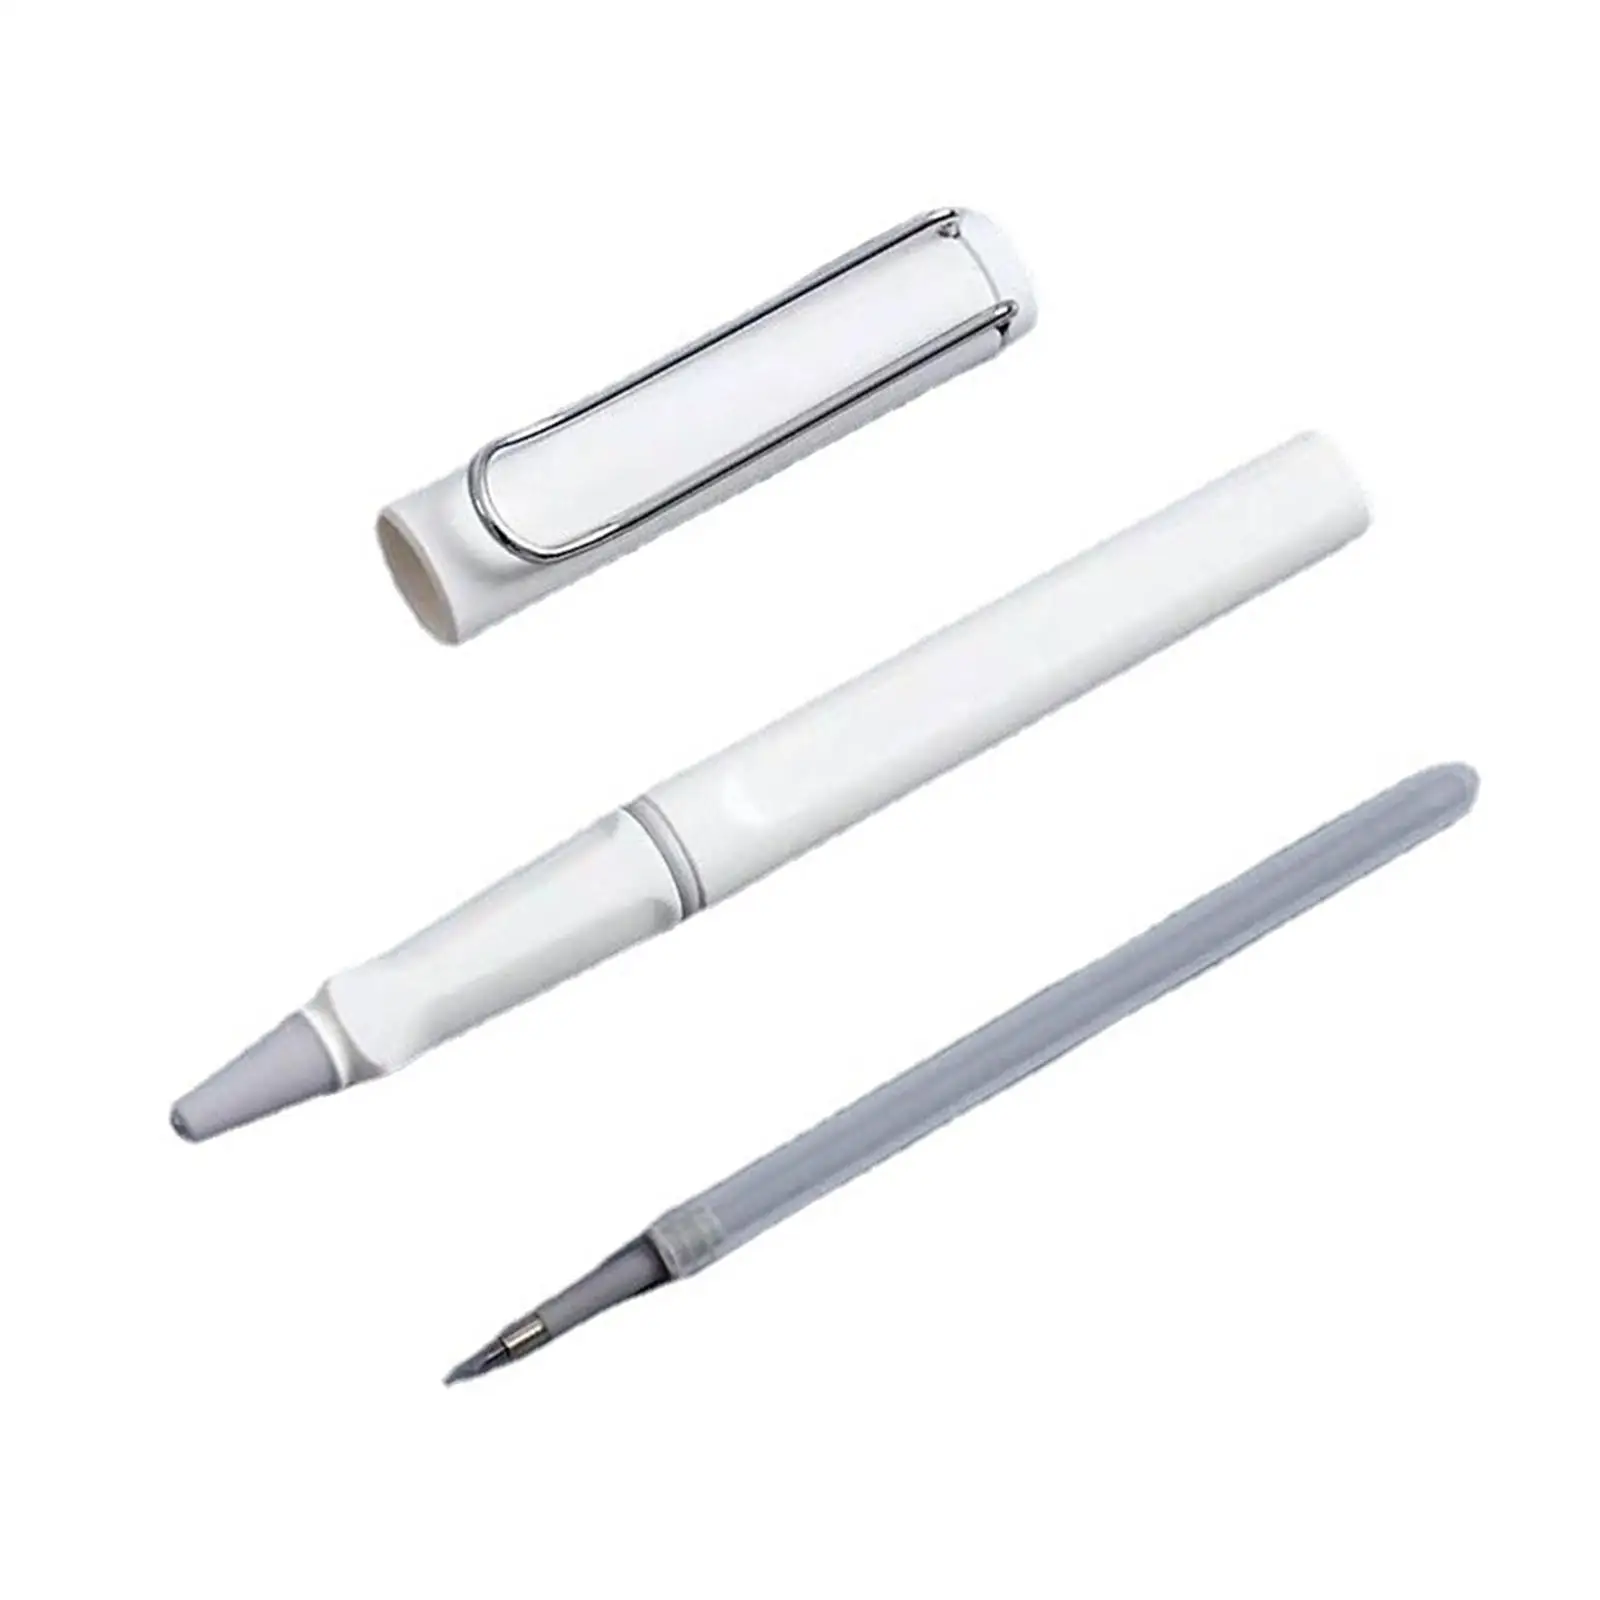 Multifunction Pocket Pen Knife Adjustable Scrapbook Craft Cutting Blade Sticker Making Art Paper Cutter Pen for Carving Office